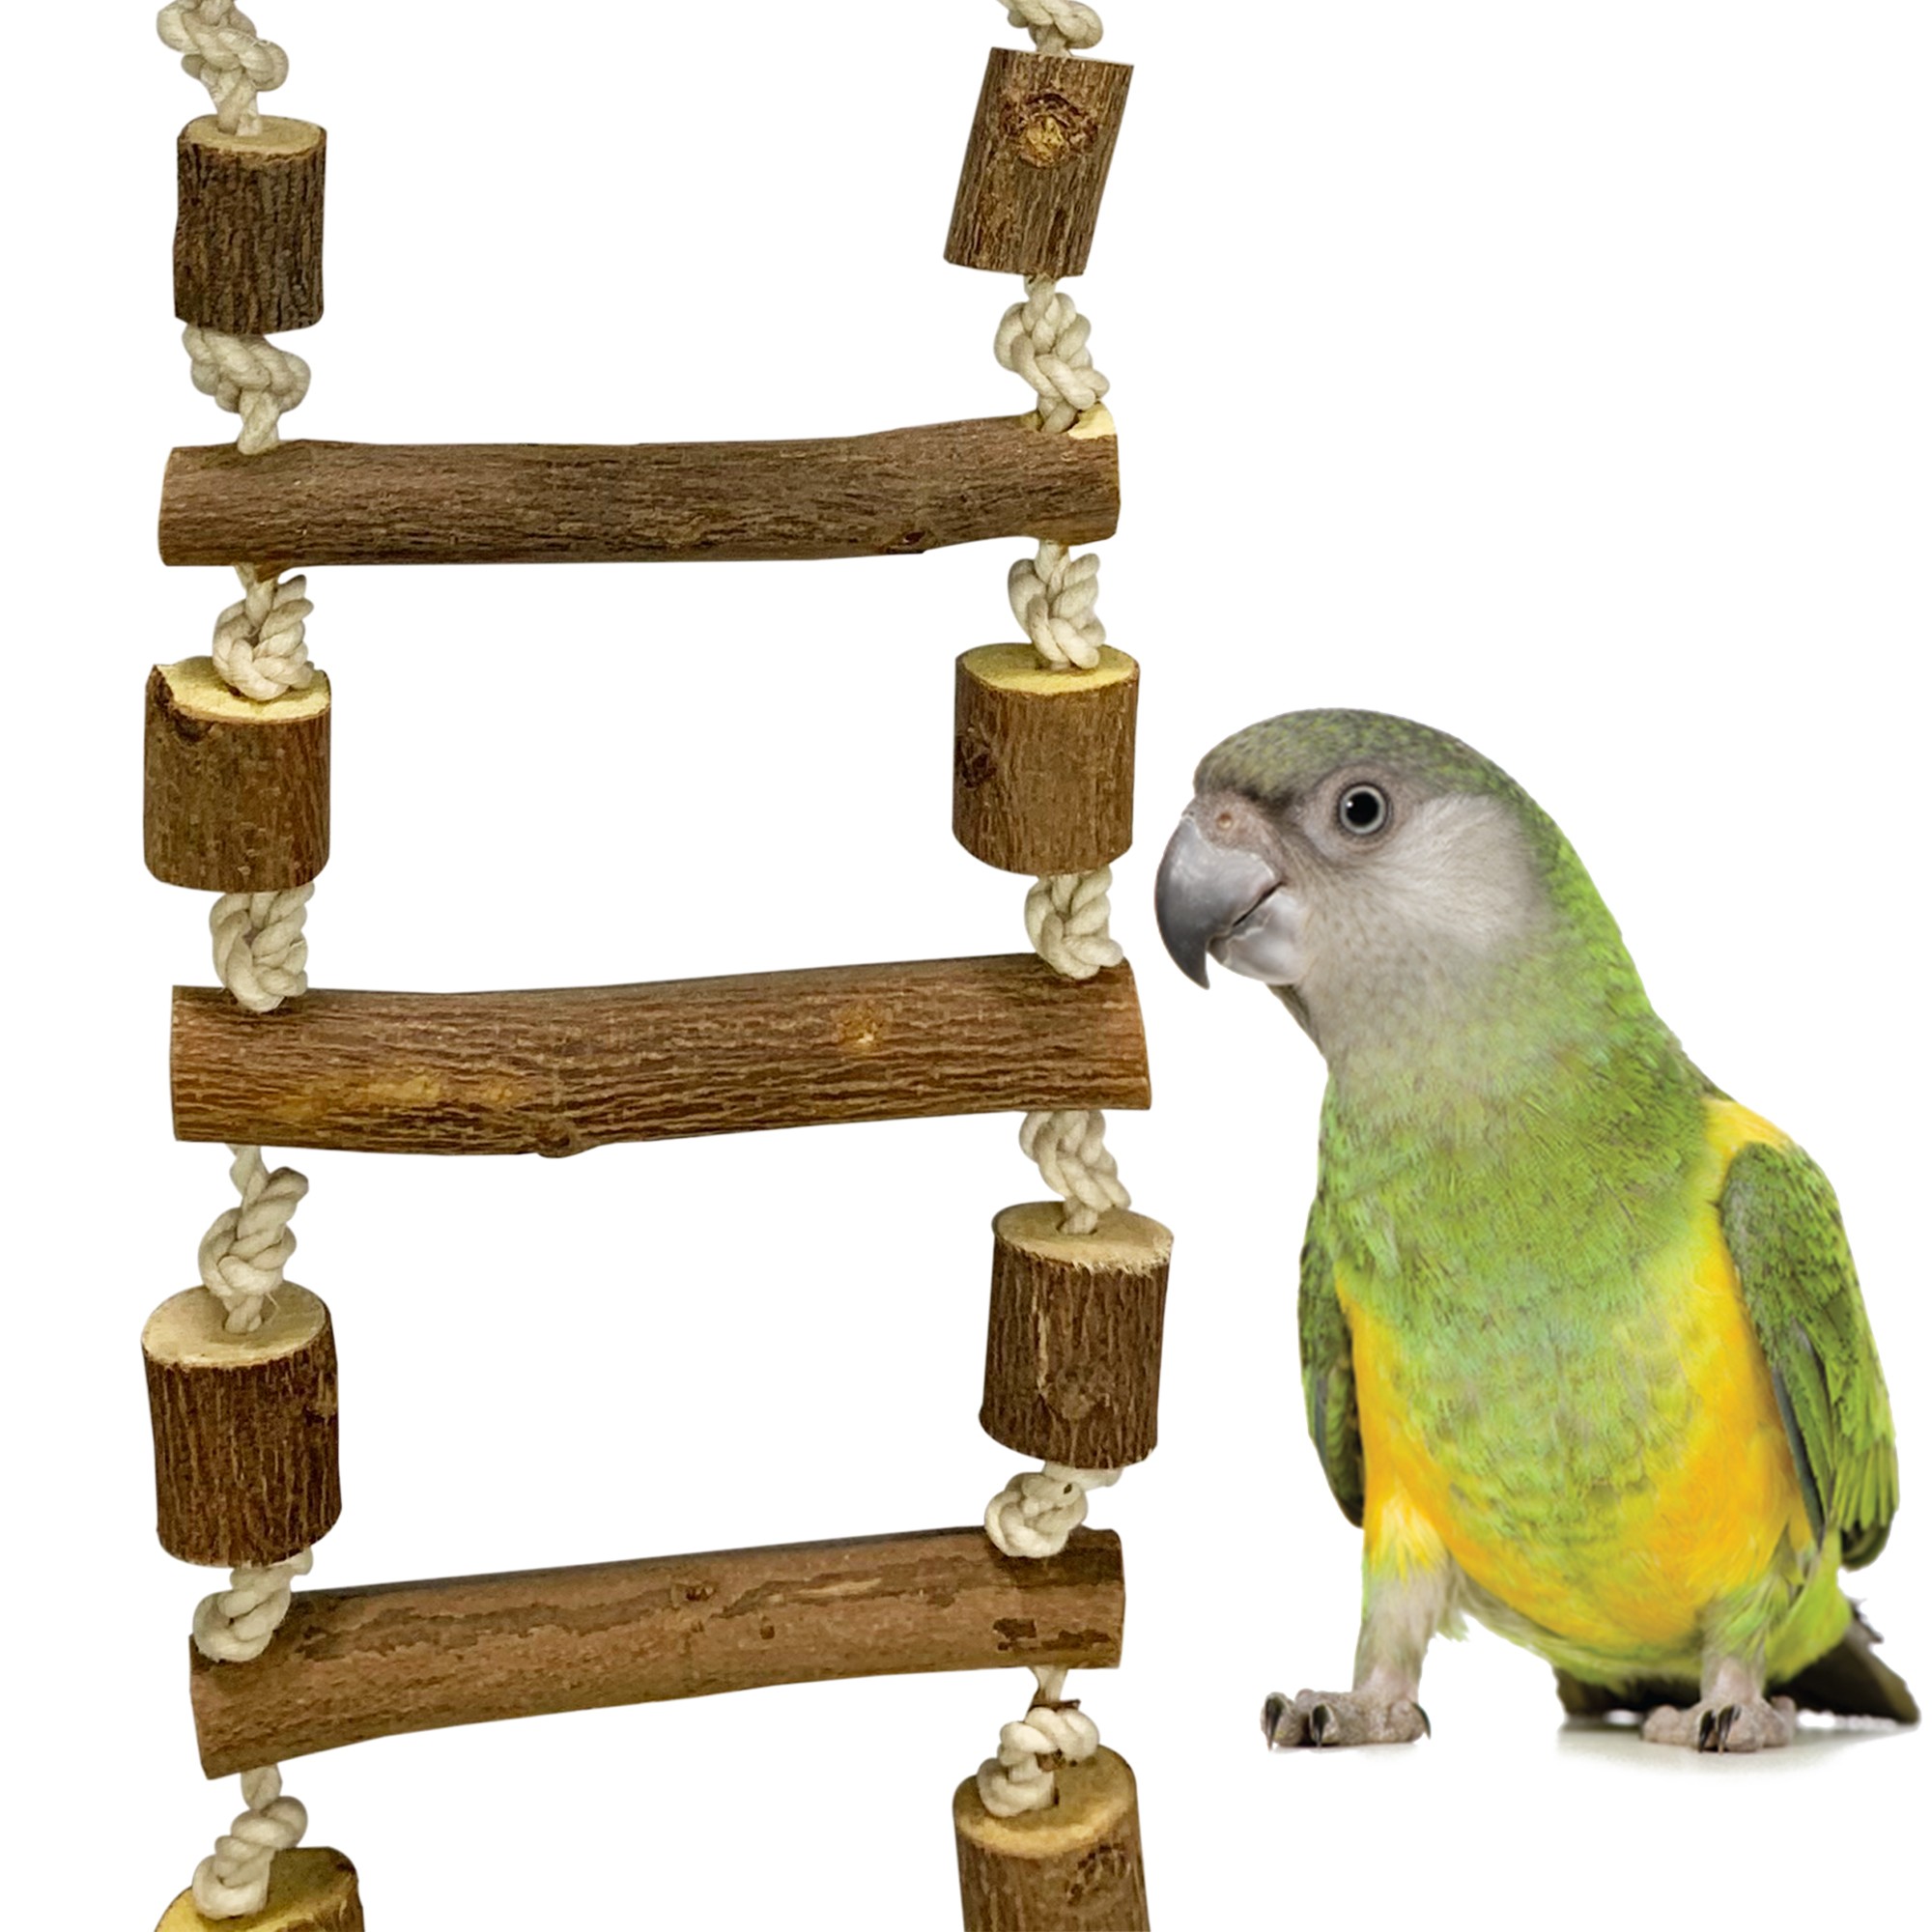 TOPINCN Natural Wood Climbing Ladder Toy Colorful Natural Wood Beads Climbing Ladder Toy Parakeet Swing Bird Toy with Hanging Hook 